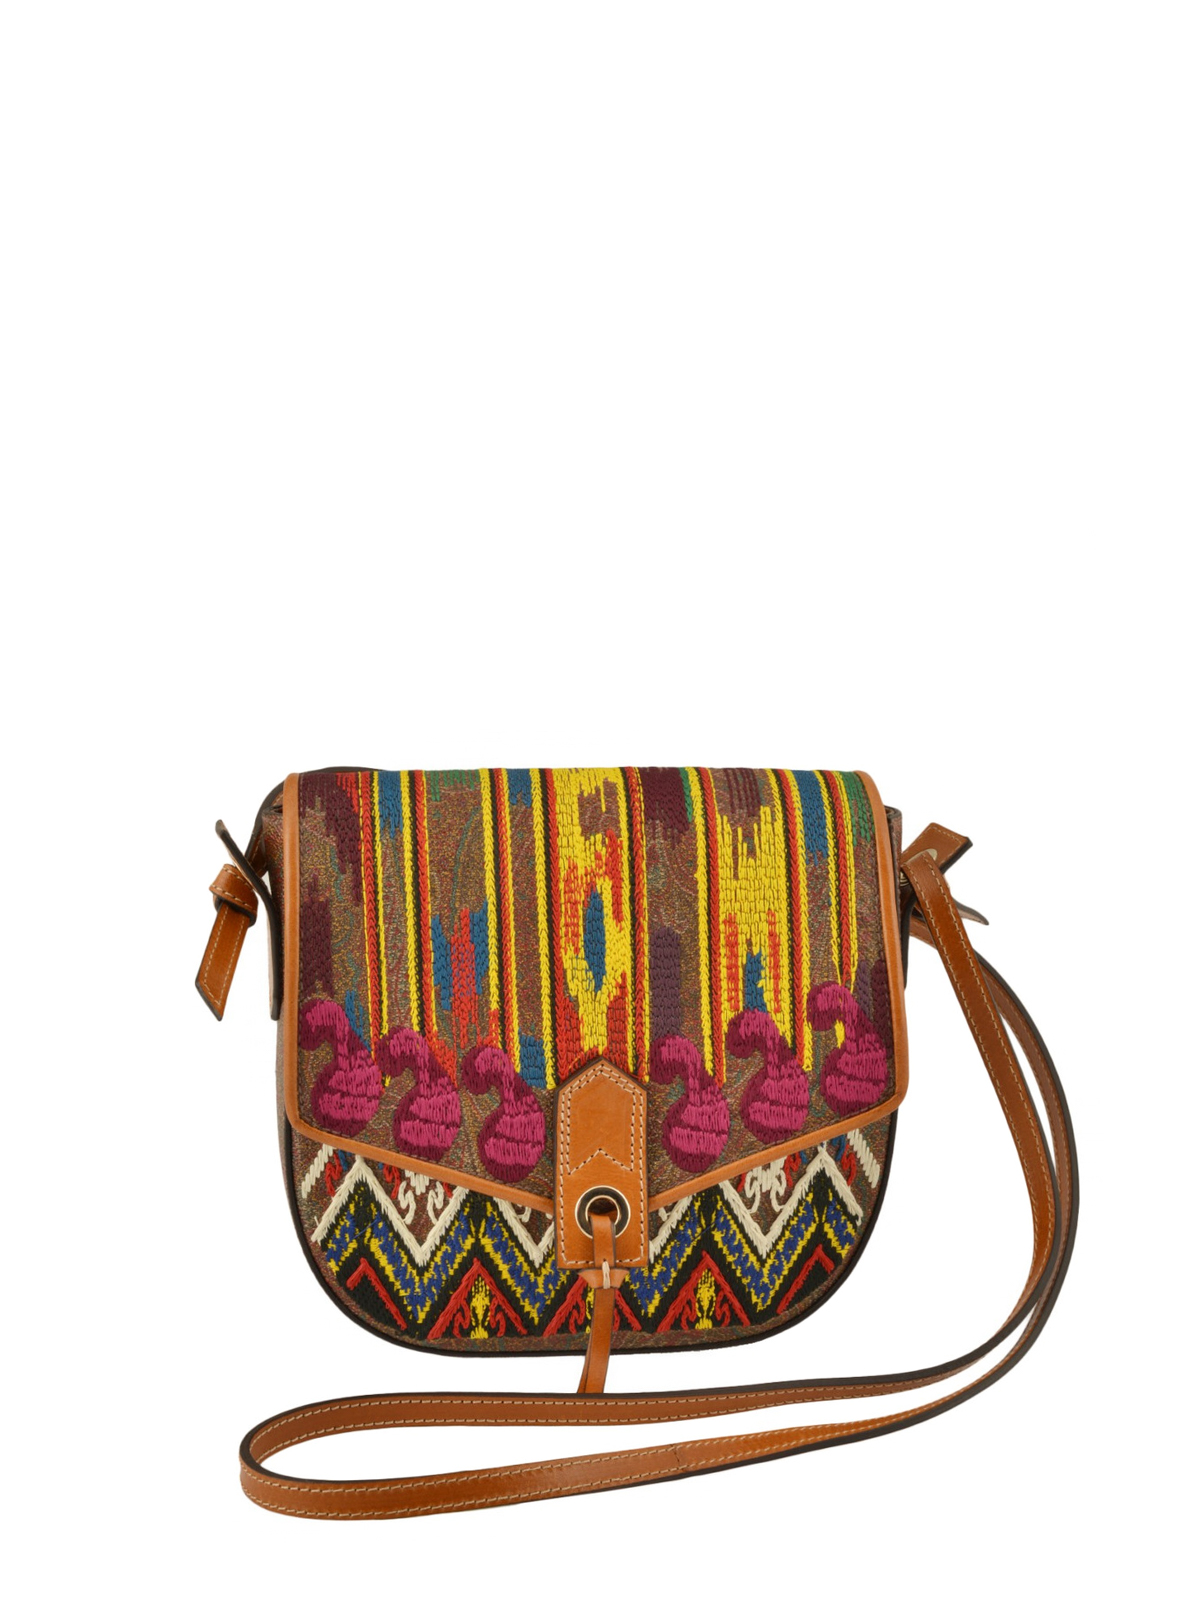 Genuine ETRO paisley tribal flap signature leather shoulder bag crossbody